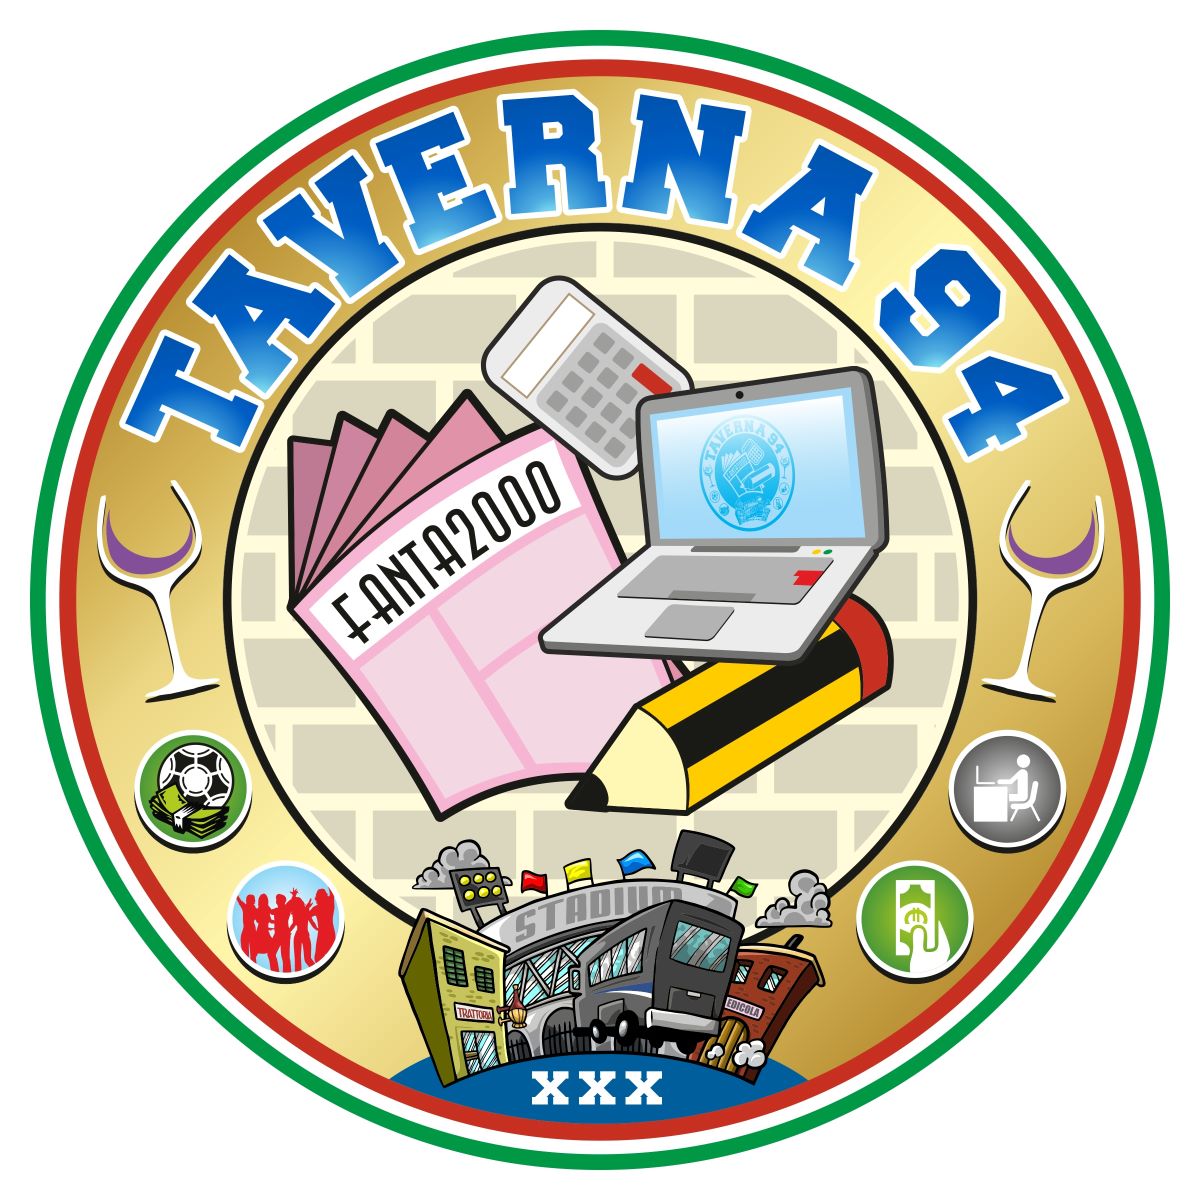 Taverna 94 Logo 30 anni JPG fondo biancomini